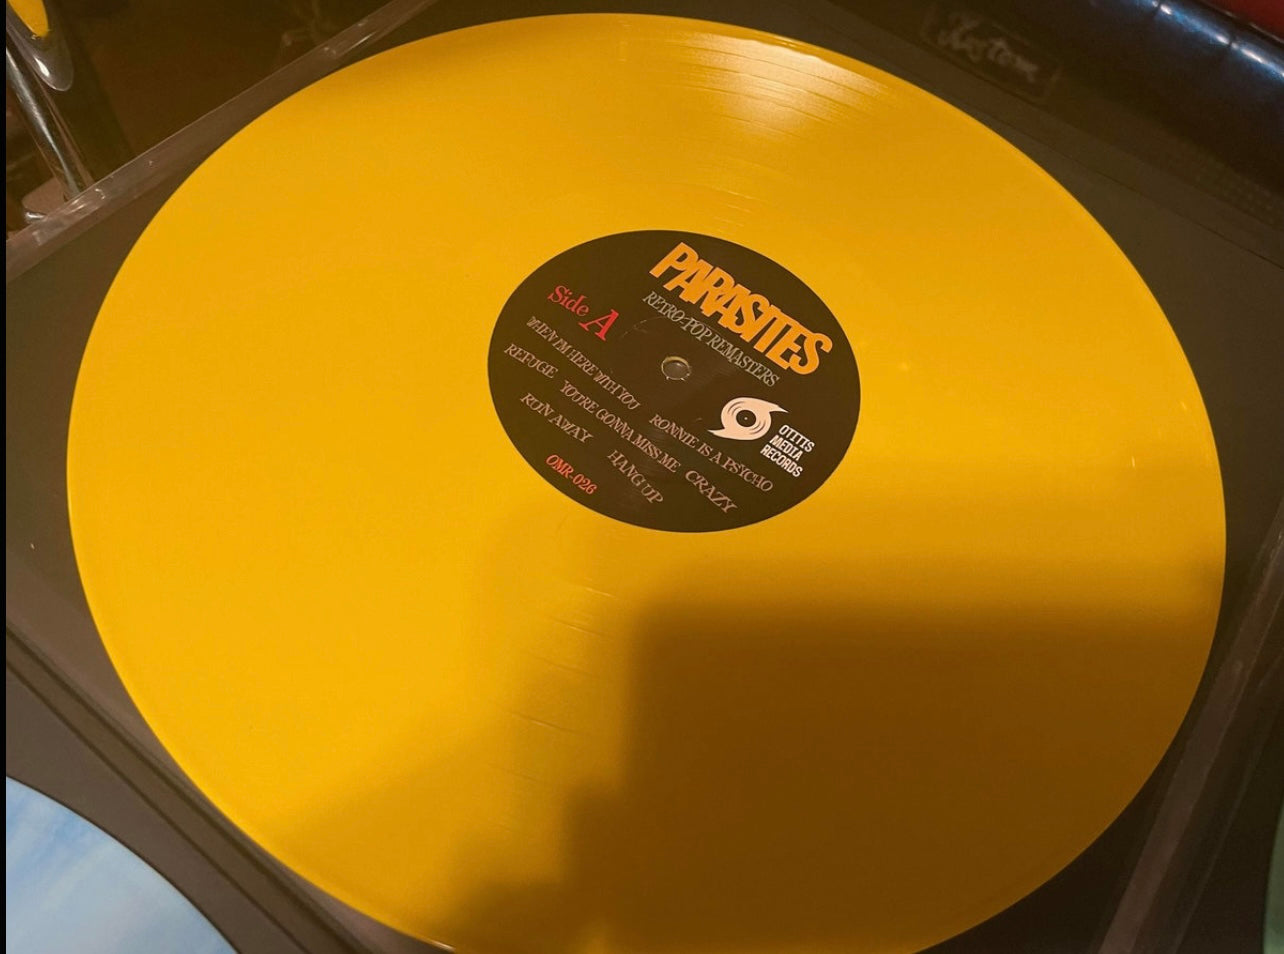 OMR-026 PARASITES “Retro-Pop Remasters” 12 inch Vinyl LP (Red,Yellow,Orange,Mint Green, Baby Blue Colored Vinyl)